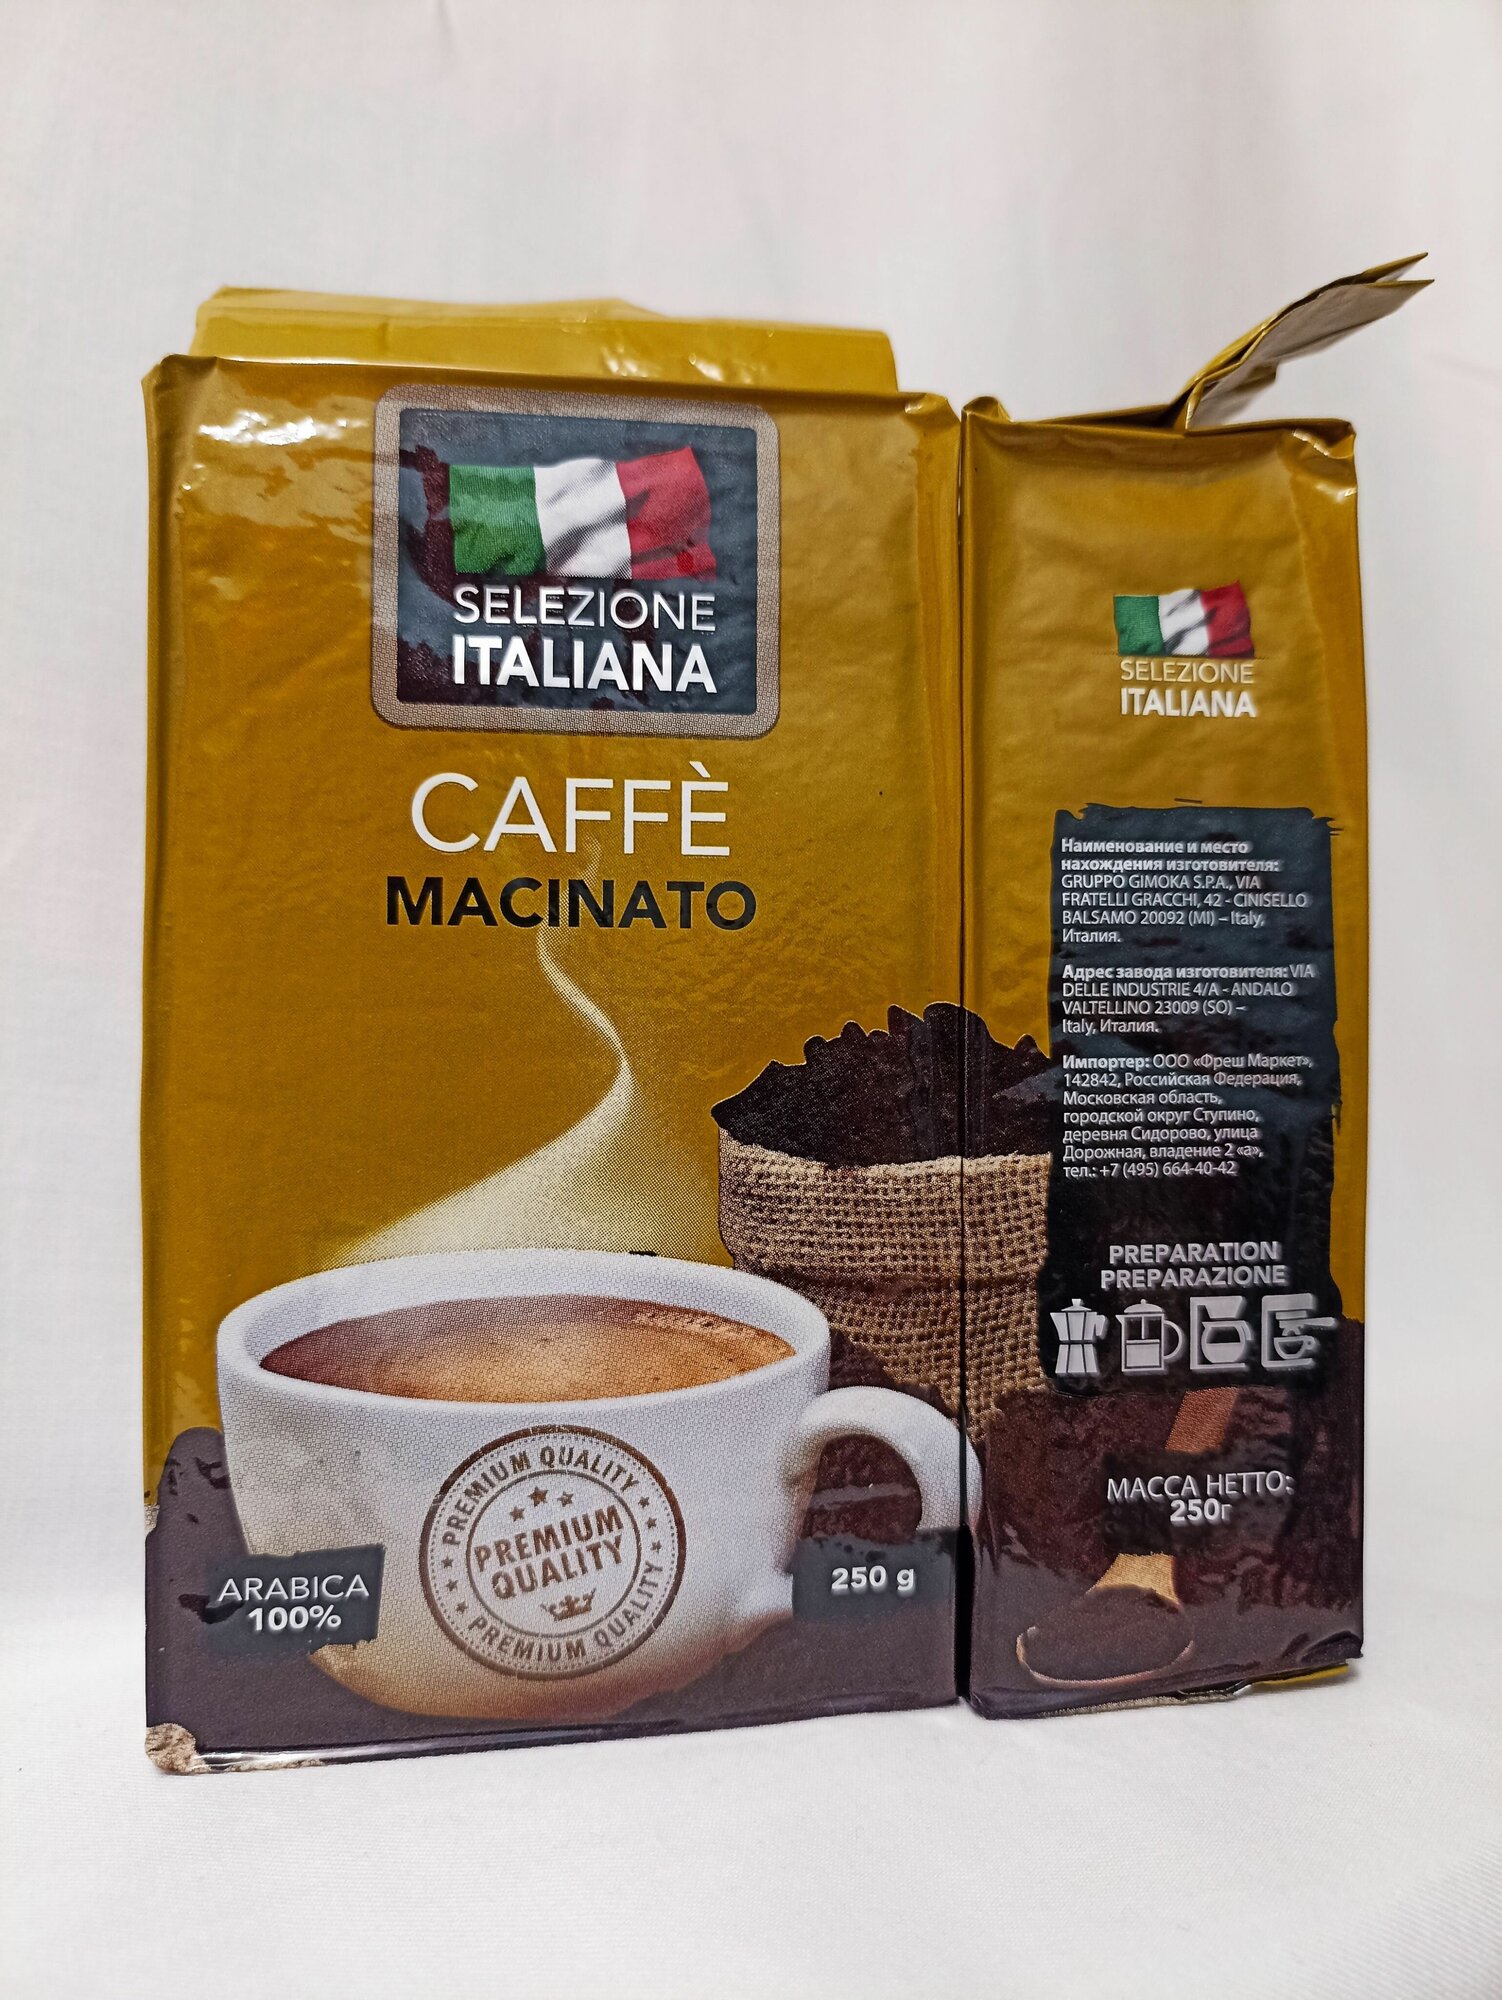 Кофе молотый 250 г Арабика 100% (Италия) Selezione ITALIANA CAFFE MACINATO, кофе натуральный жареный молотый 250 грамм - фотография № 5